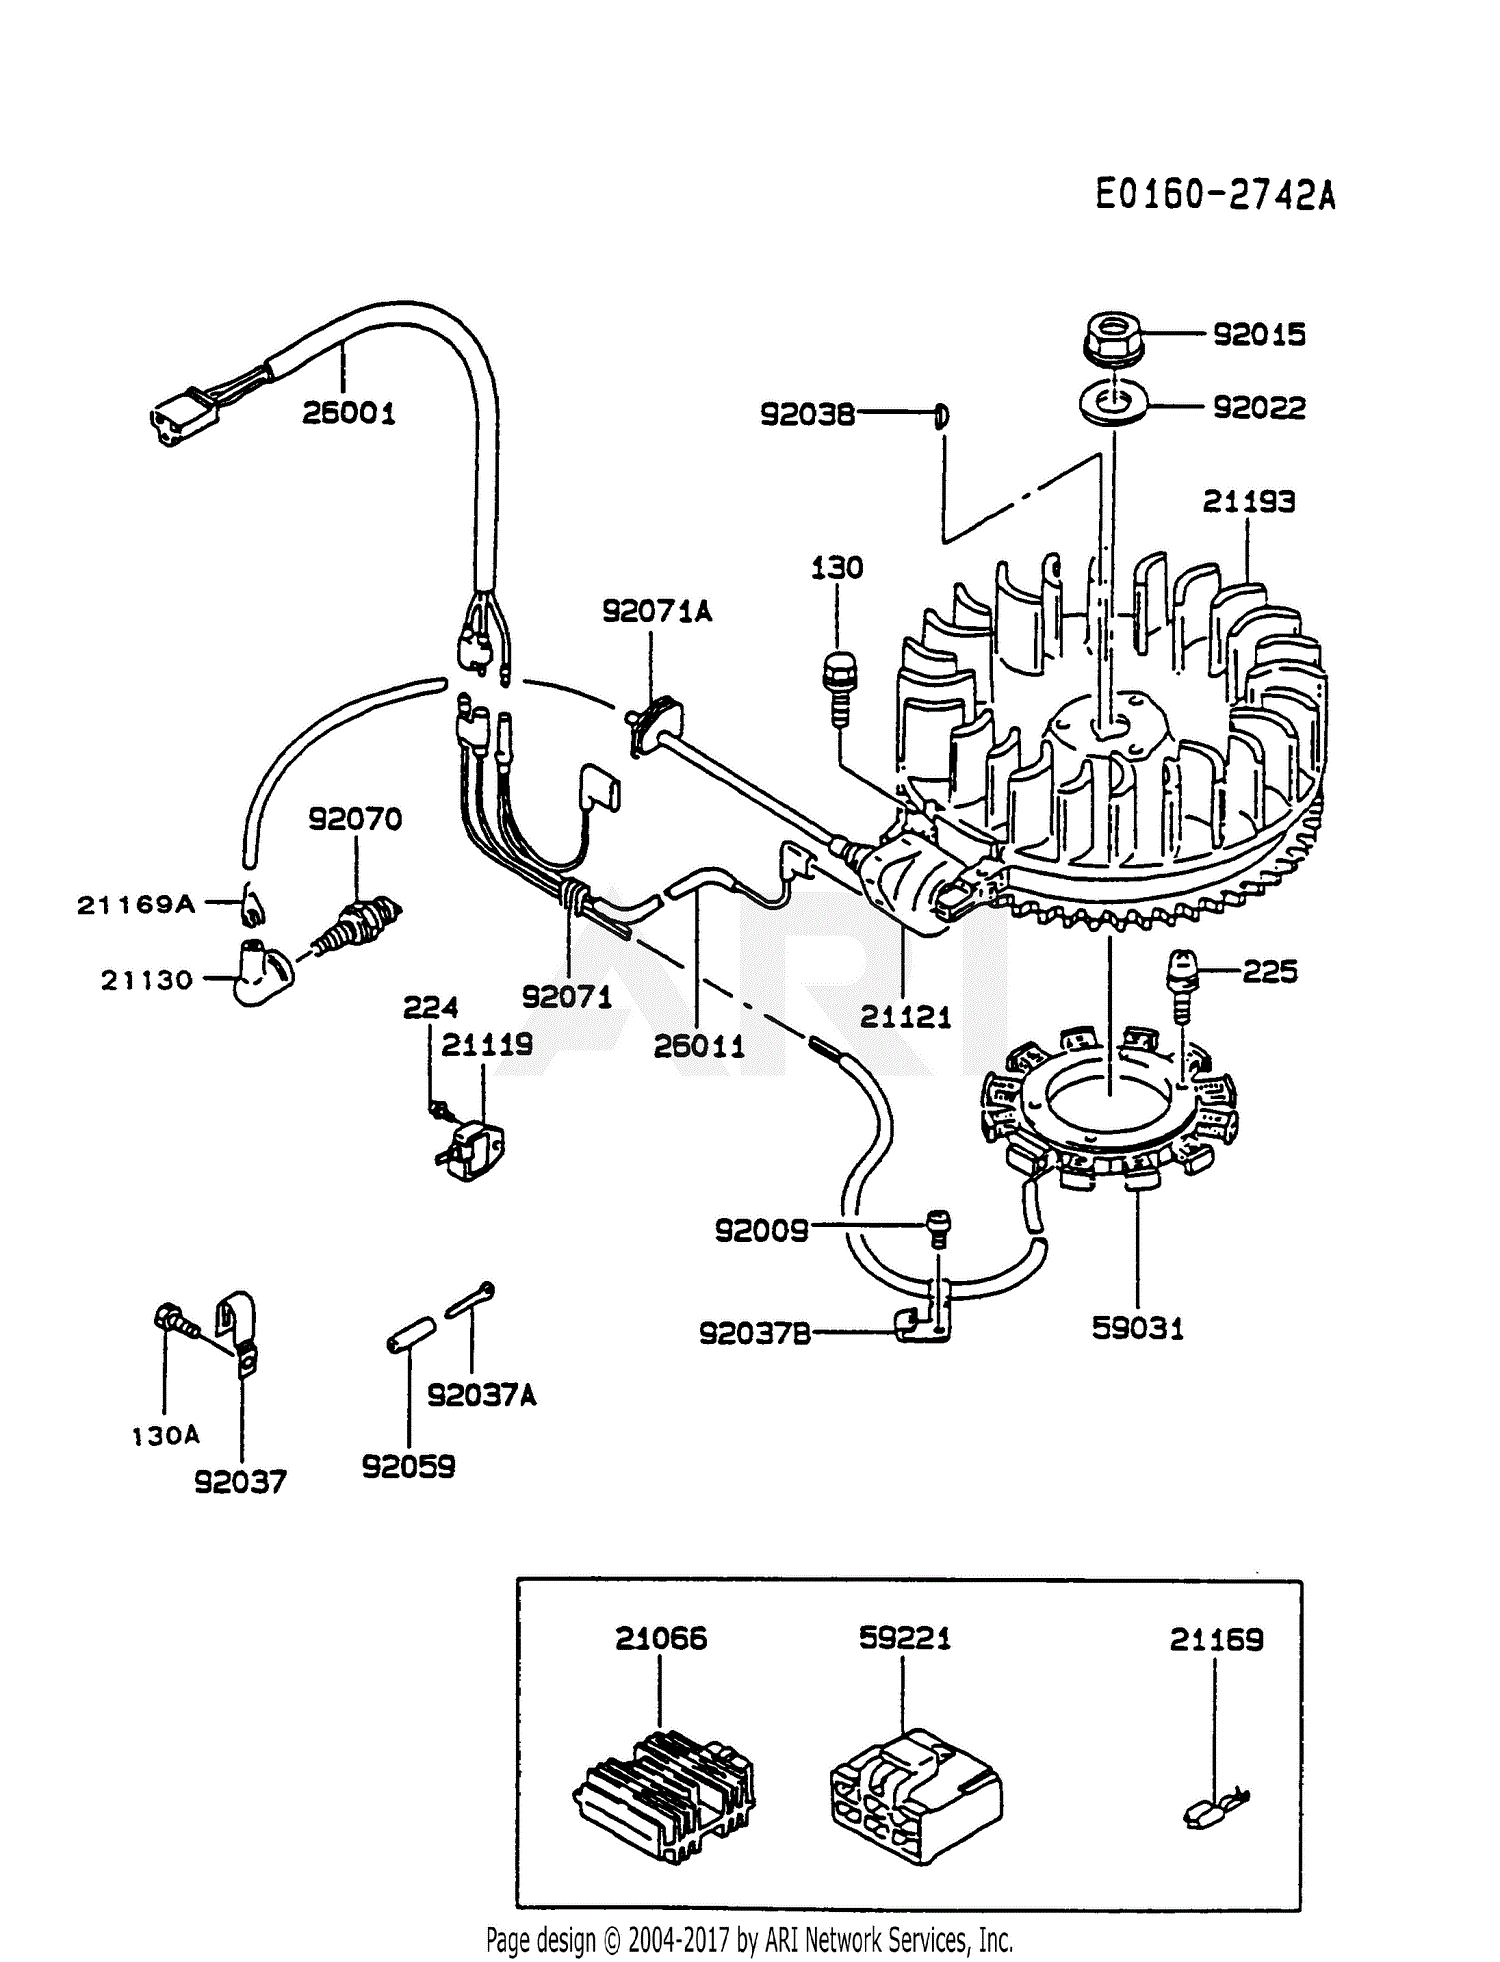 Am Fm Sony Cdx Xplod Car Stereo Wiring Diagram 5710 - Wiring Diagram Networks